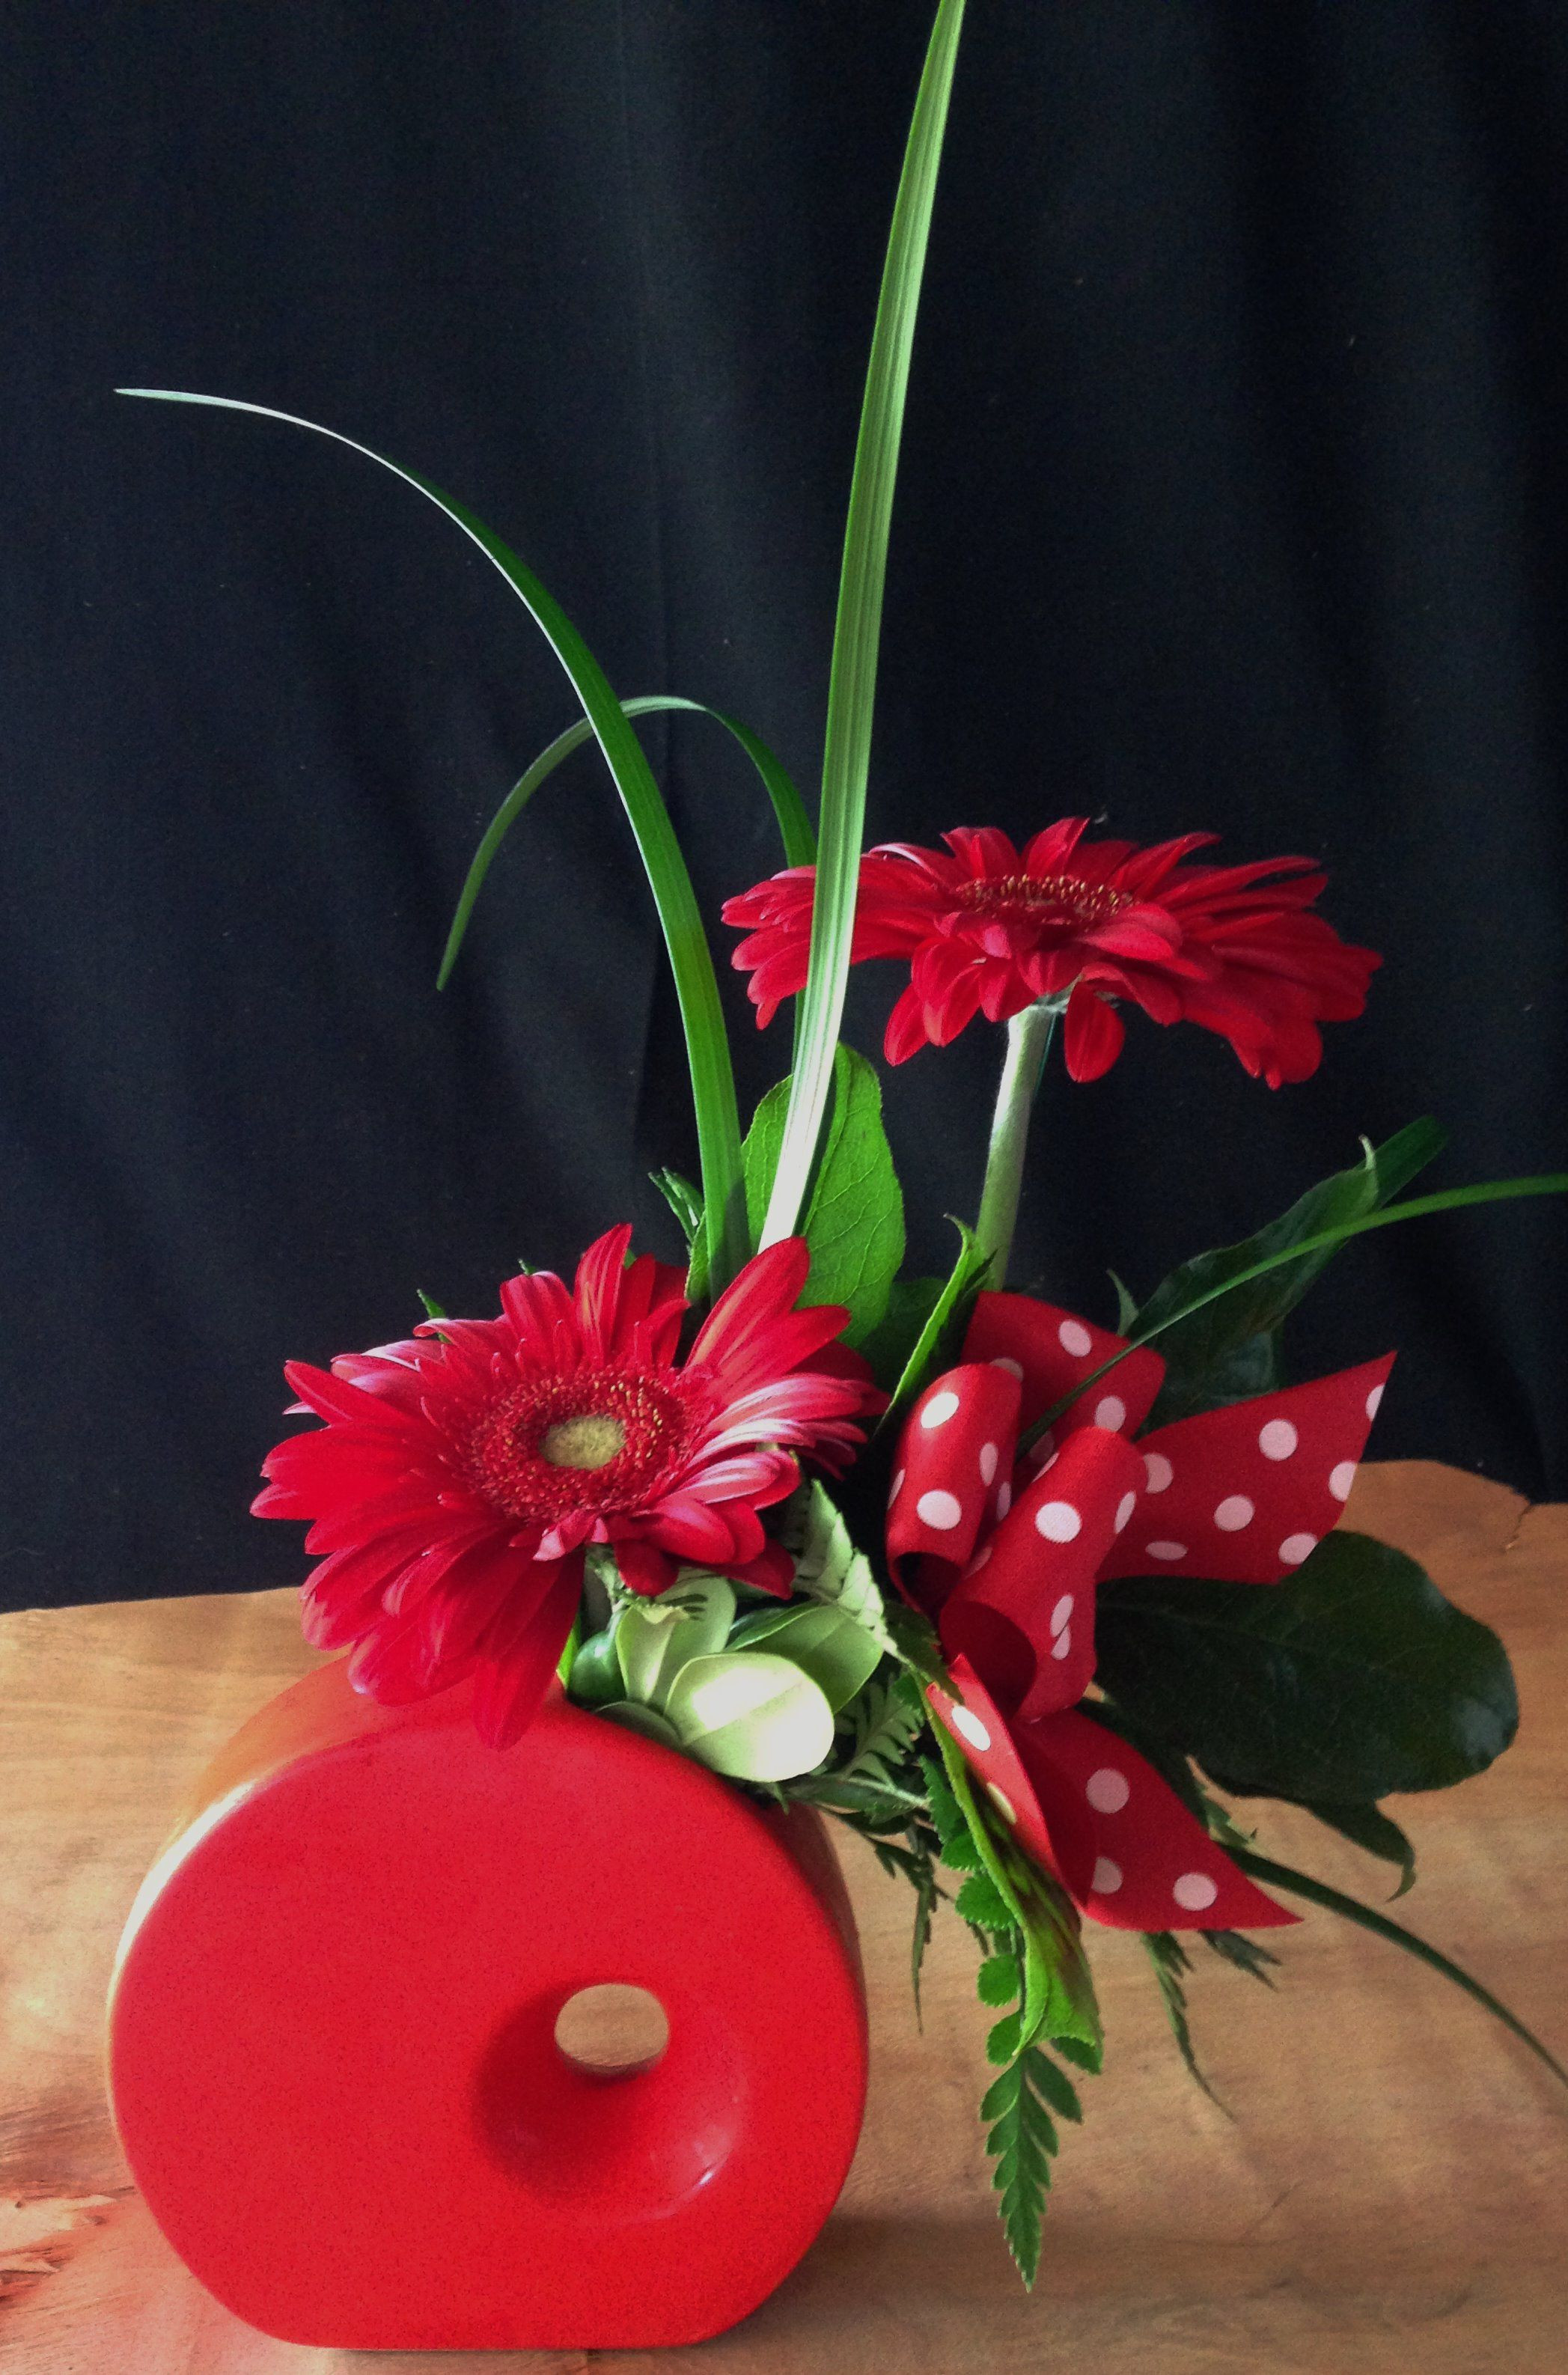 daisies in a vase of red ceramic vase image funky red ceramic vase filled with red in funky red ceramic vase filled with red gerbera daisies and a polka